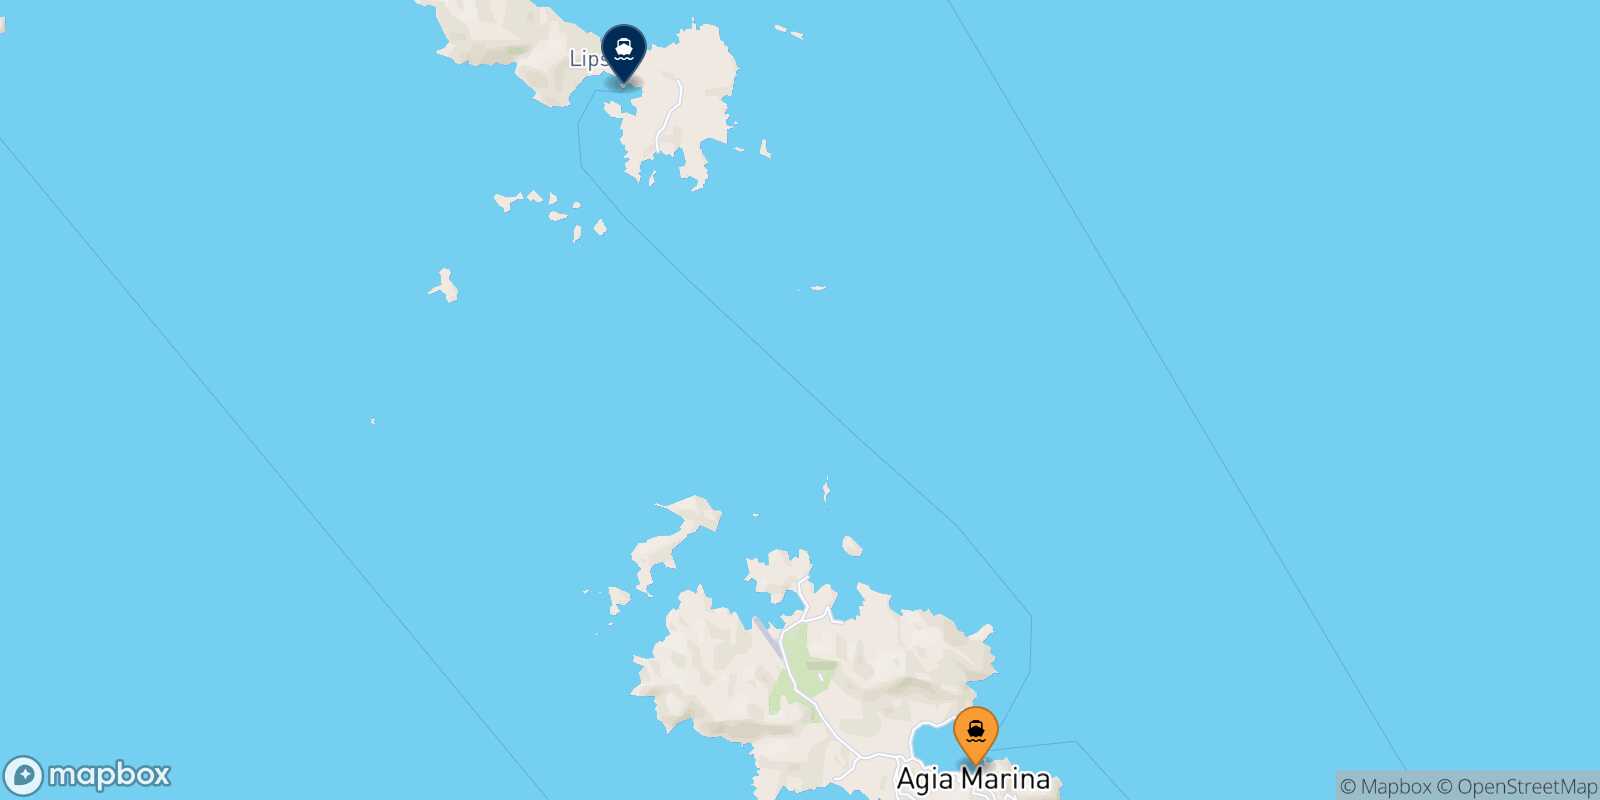 Agia Marina (Leros) Lipsi route map